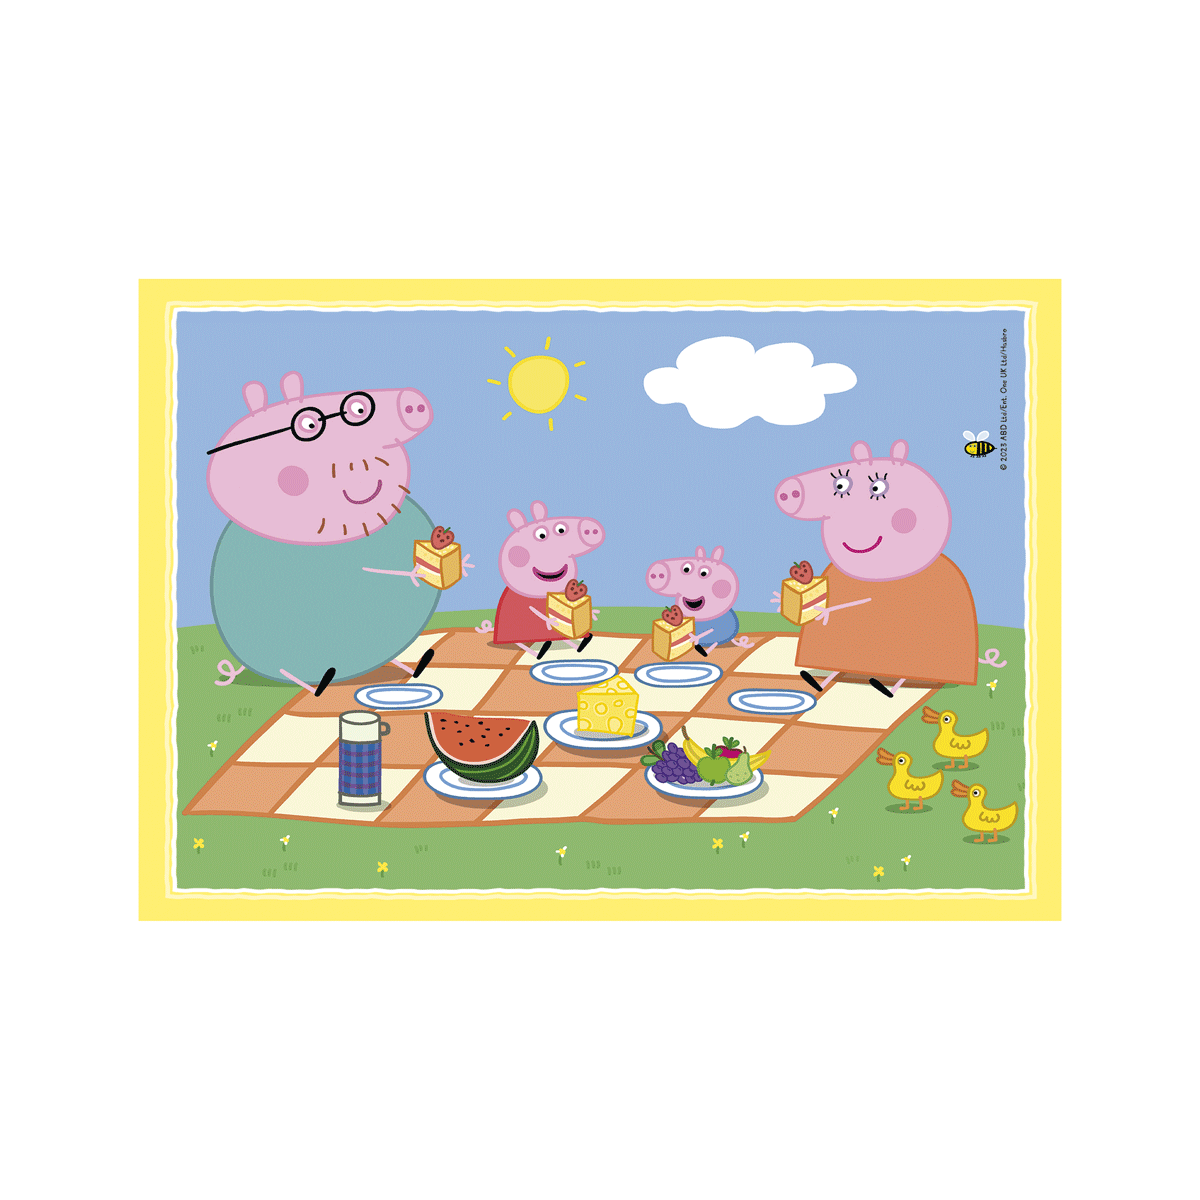 Clementoni supercolor puzzle 4in1 peppa pig - 1x12 + 1x16 + 1x20 + 1x24 pezzi, puzzle bambini 3 anni - CLEMENTONI